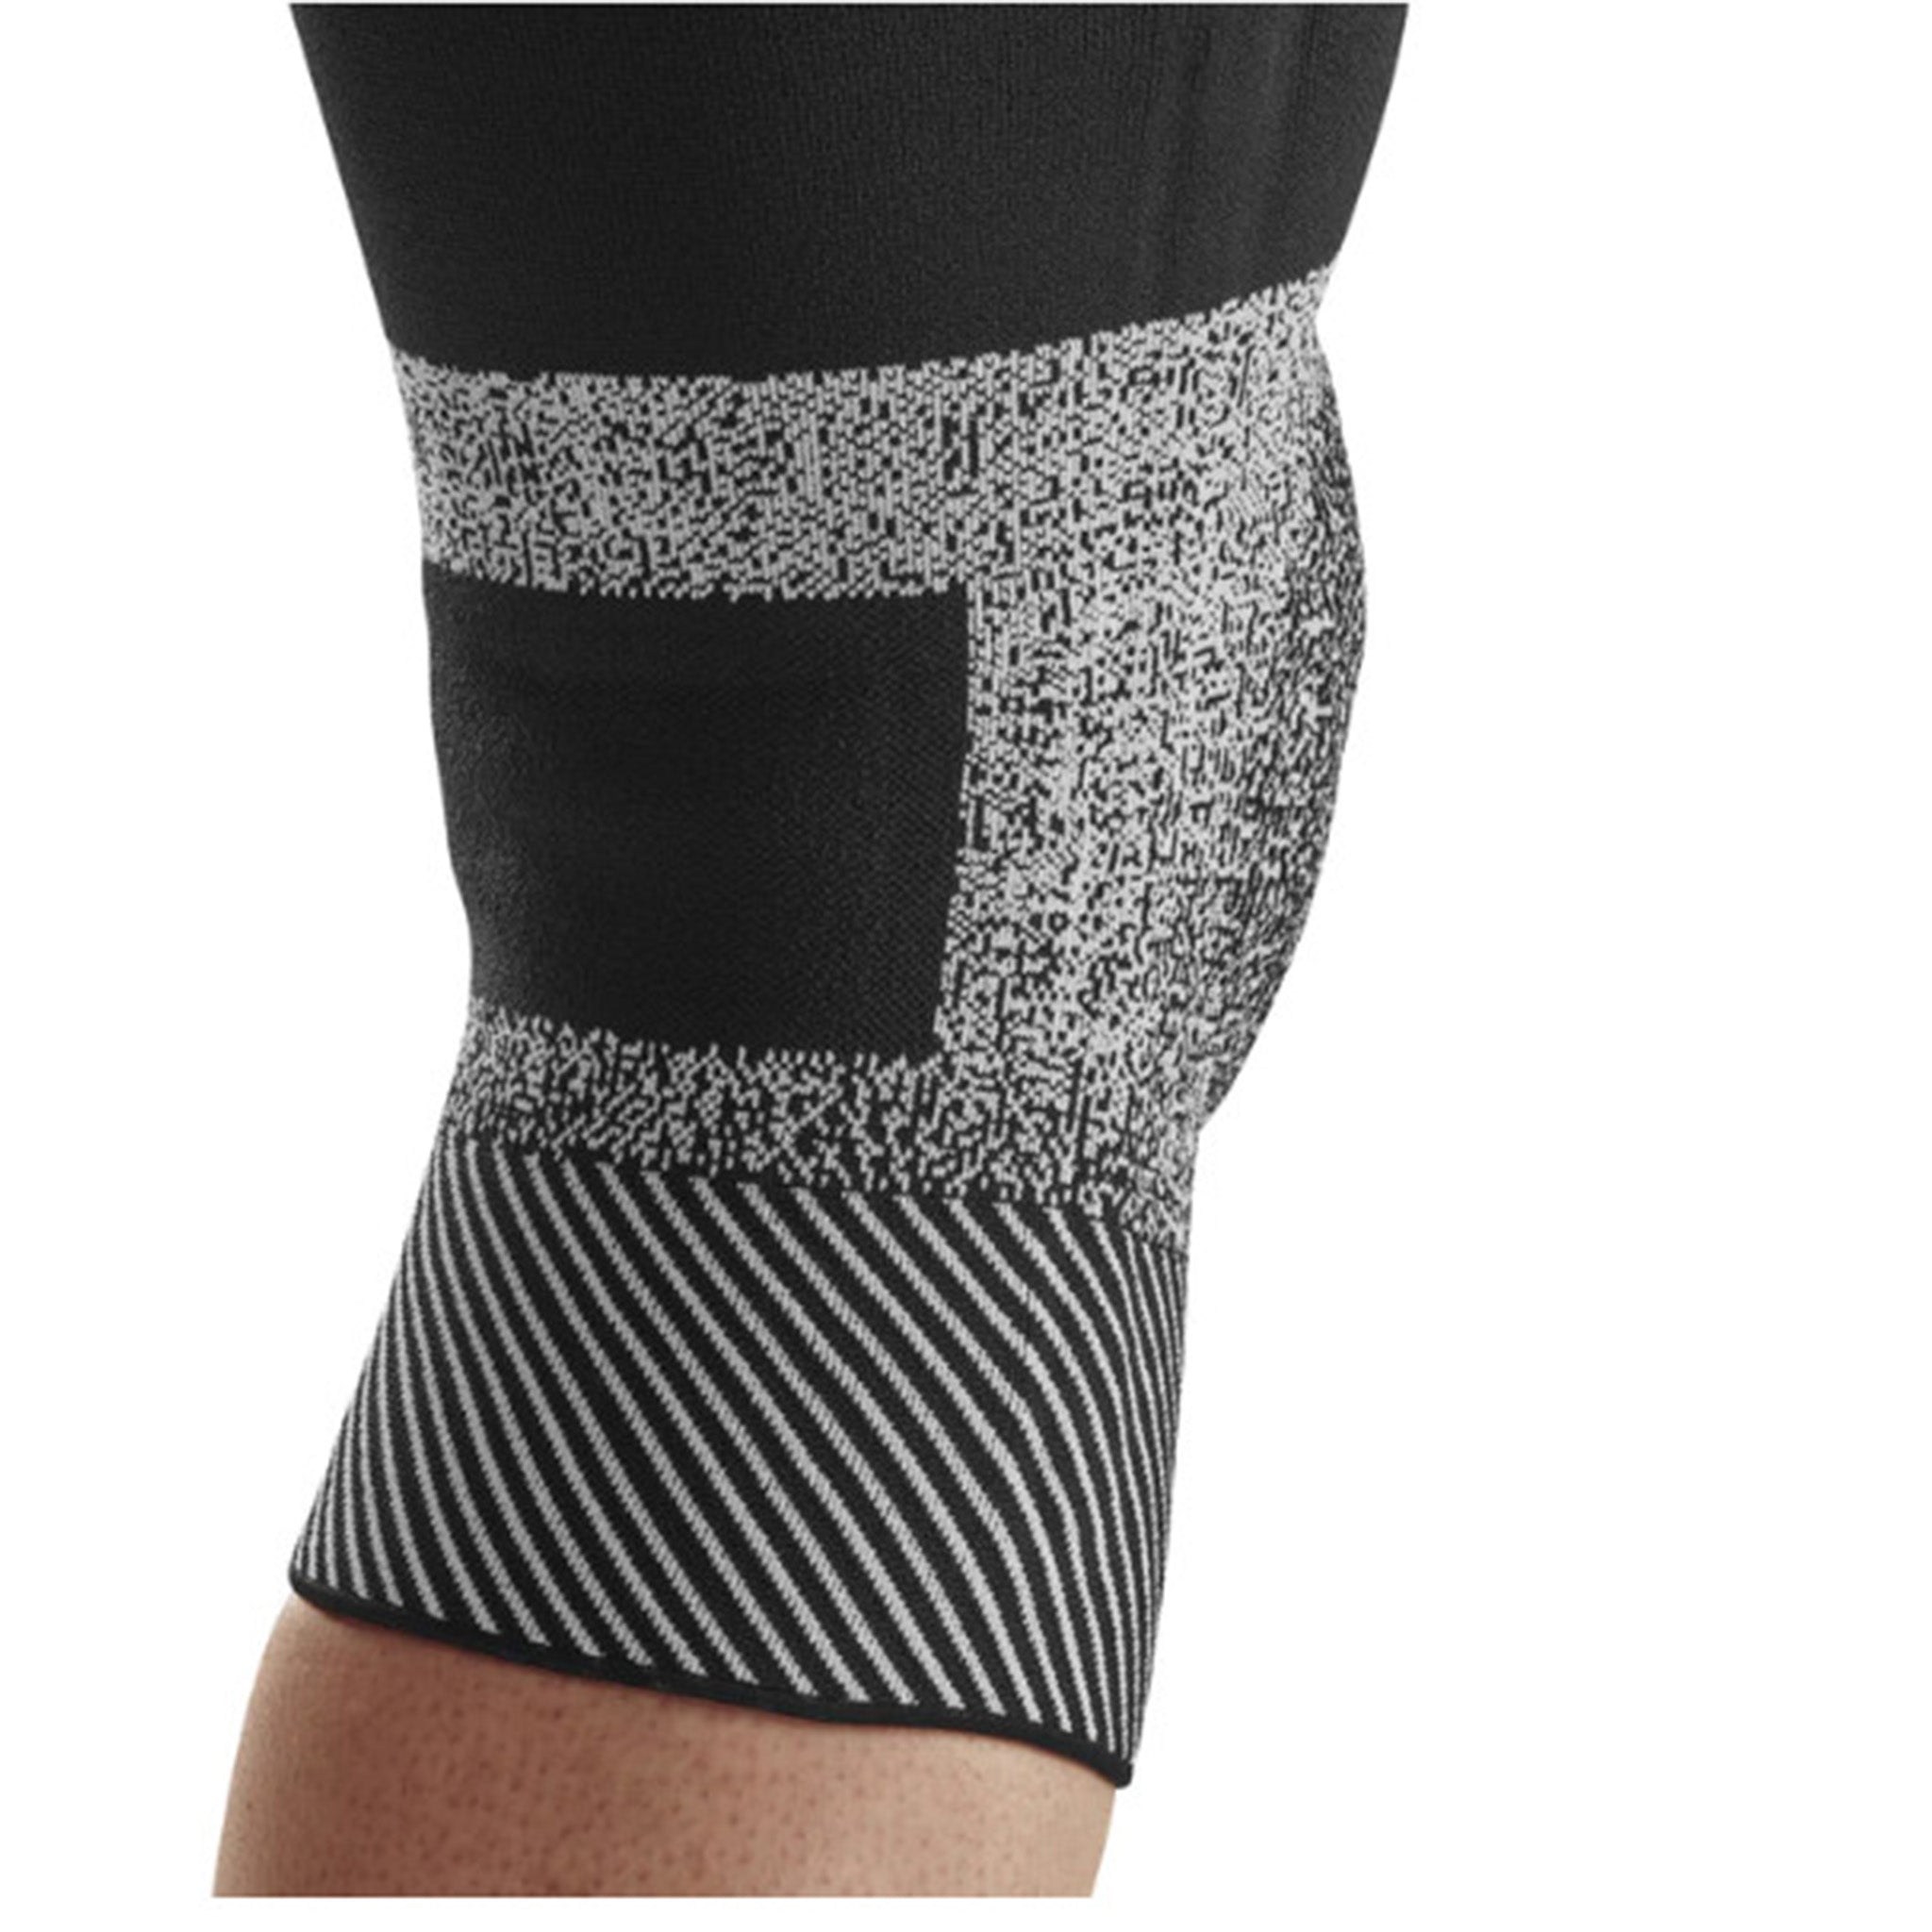 CEP max support, knee sleeve, unisex